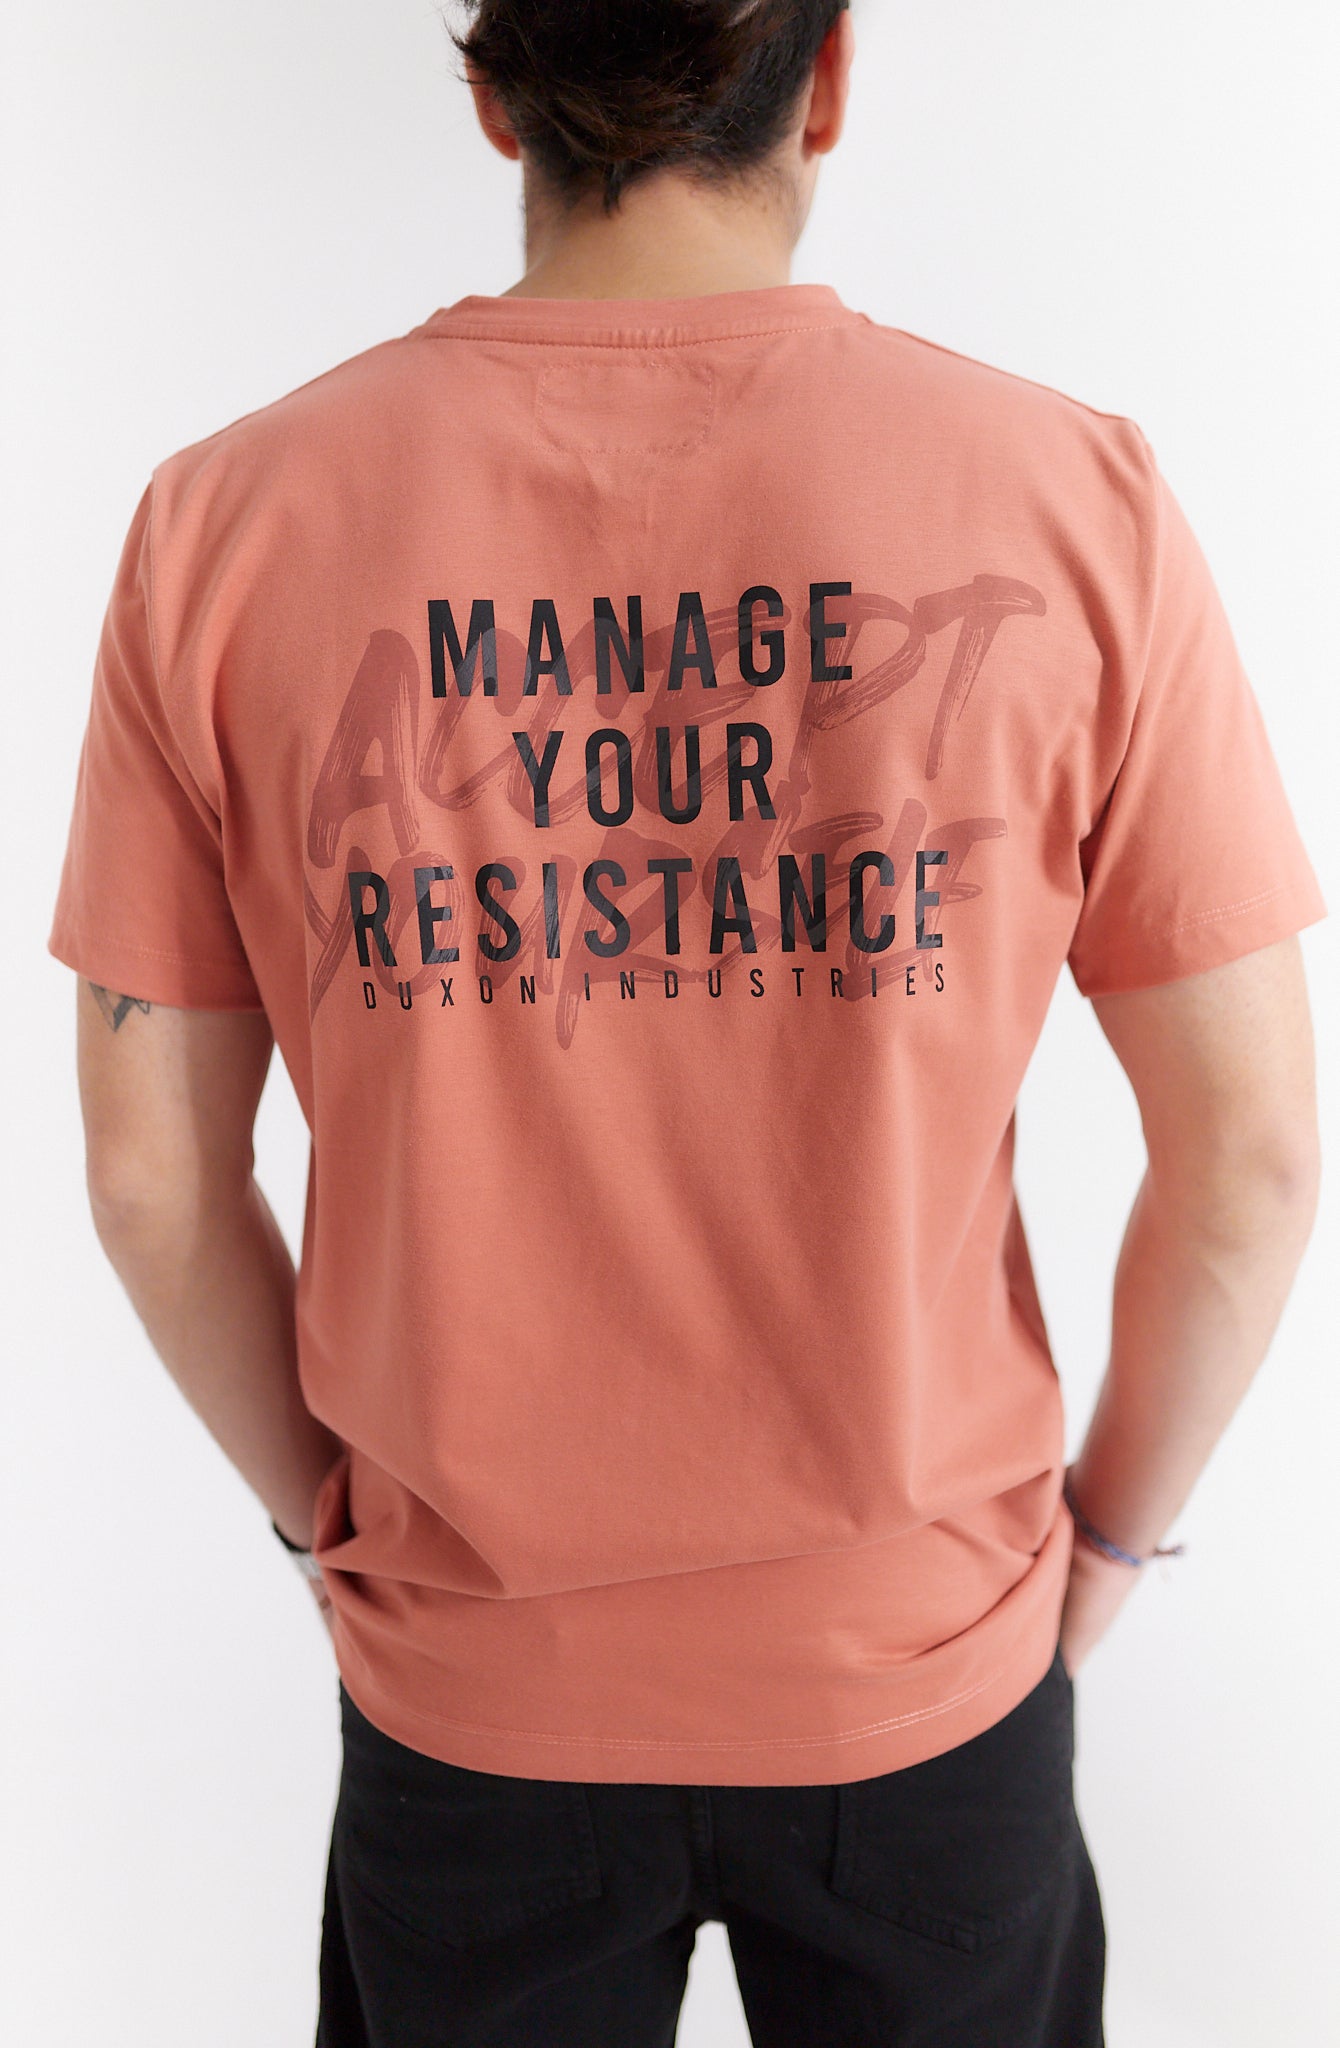 REMERA DOBLE ESTAMPA “Manage your resistance”